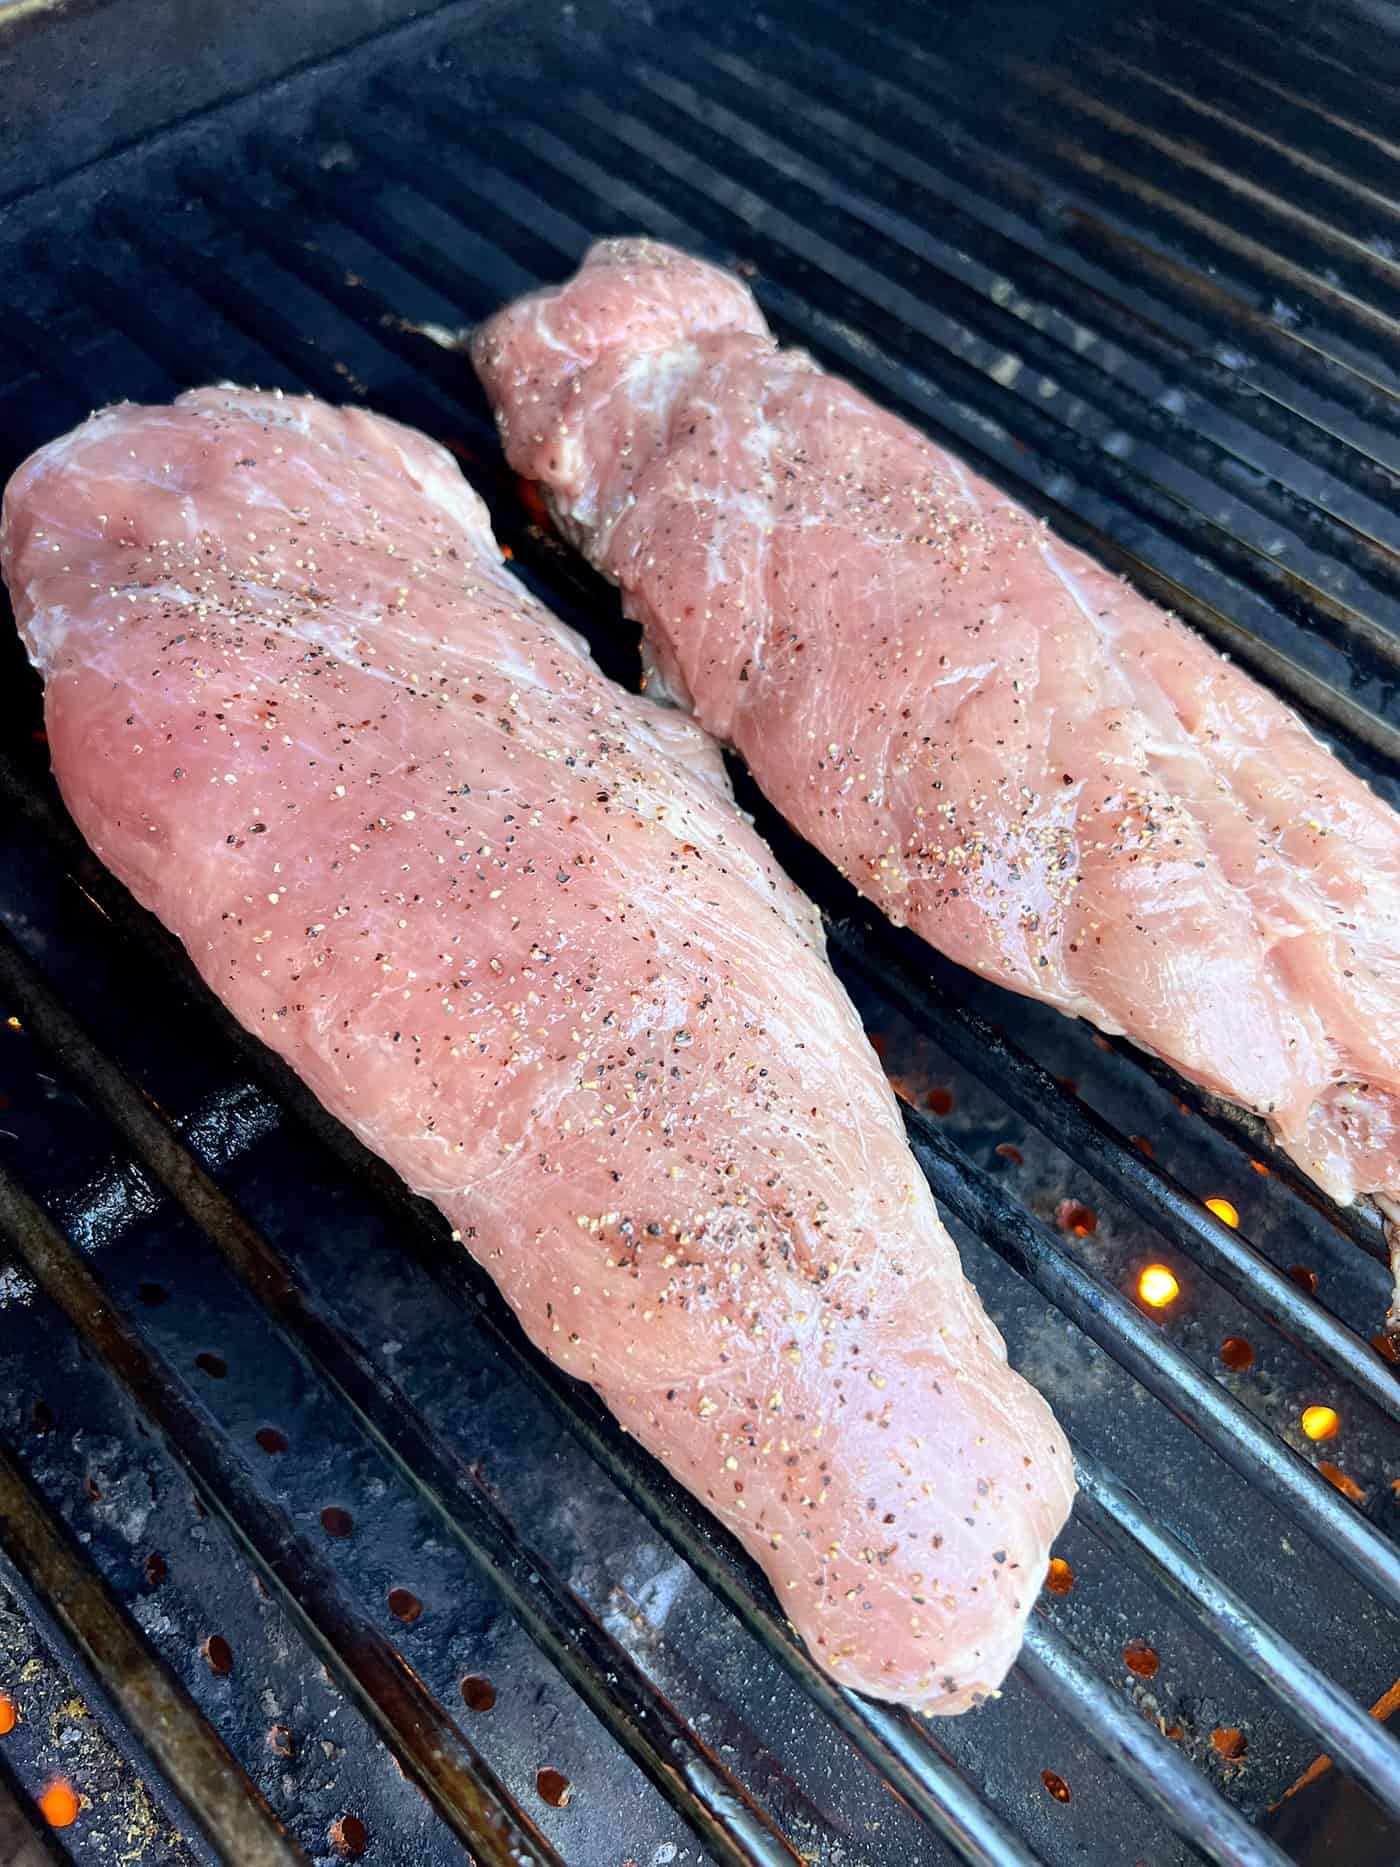 Two pork tenderloins on the grill